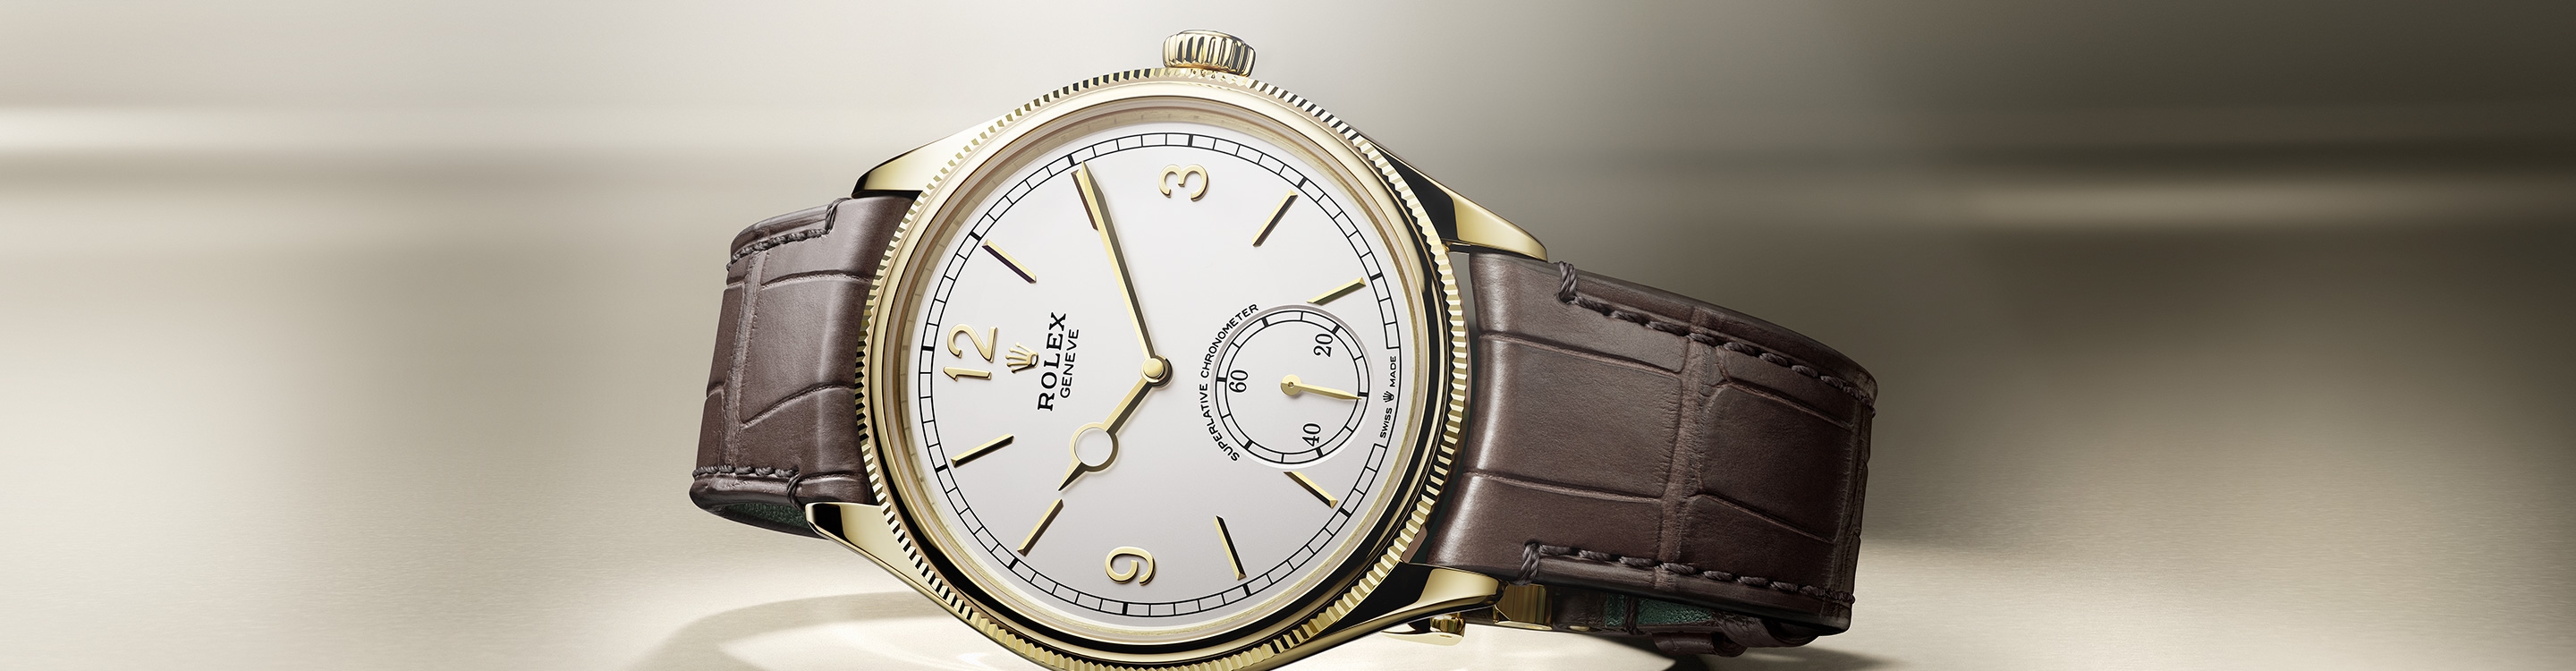 Rolex 1908 in Gold, M52509-0002 | Europe Watch Company